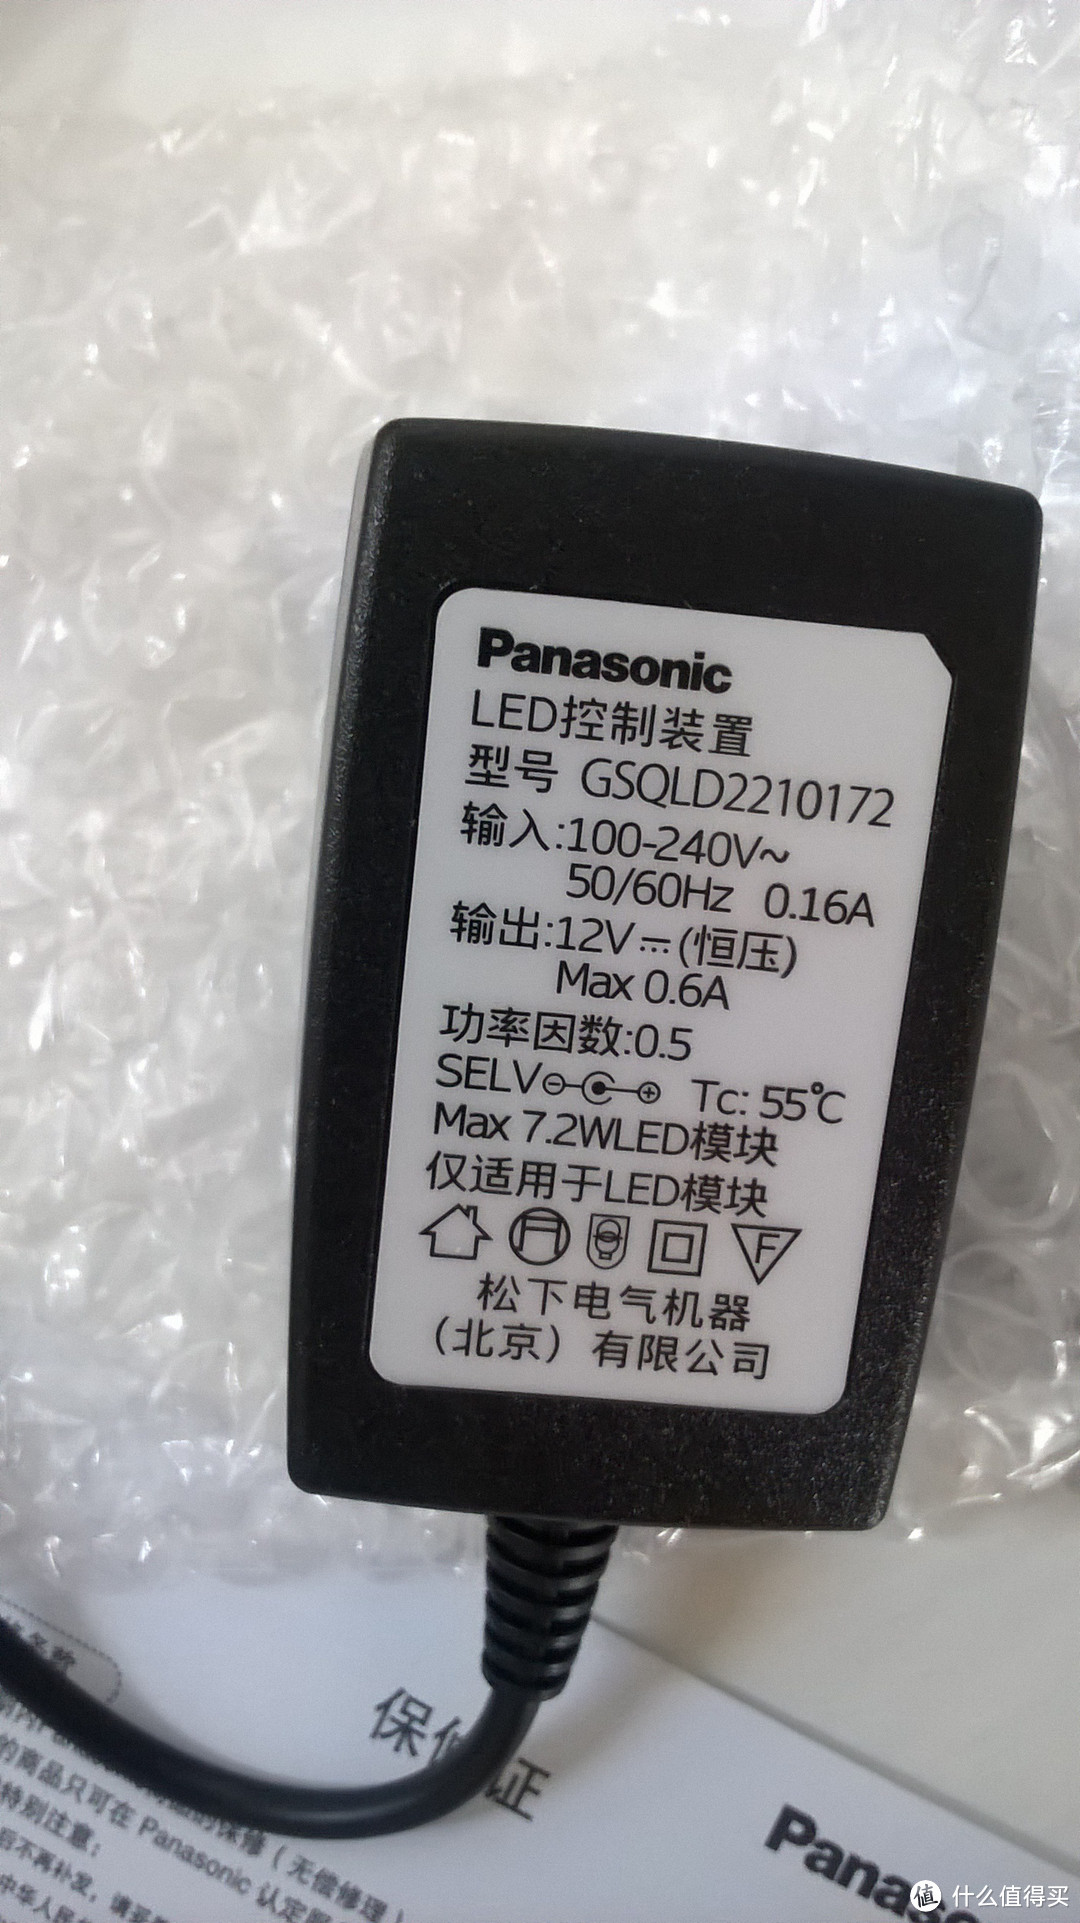 Panasonic 松下 SQ-LE530-W72 白色款五段可调光LED台灯开箱